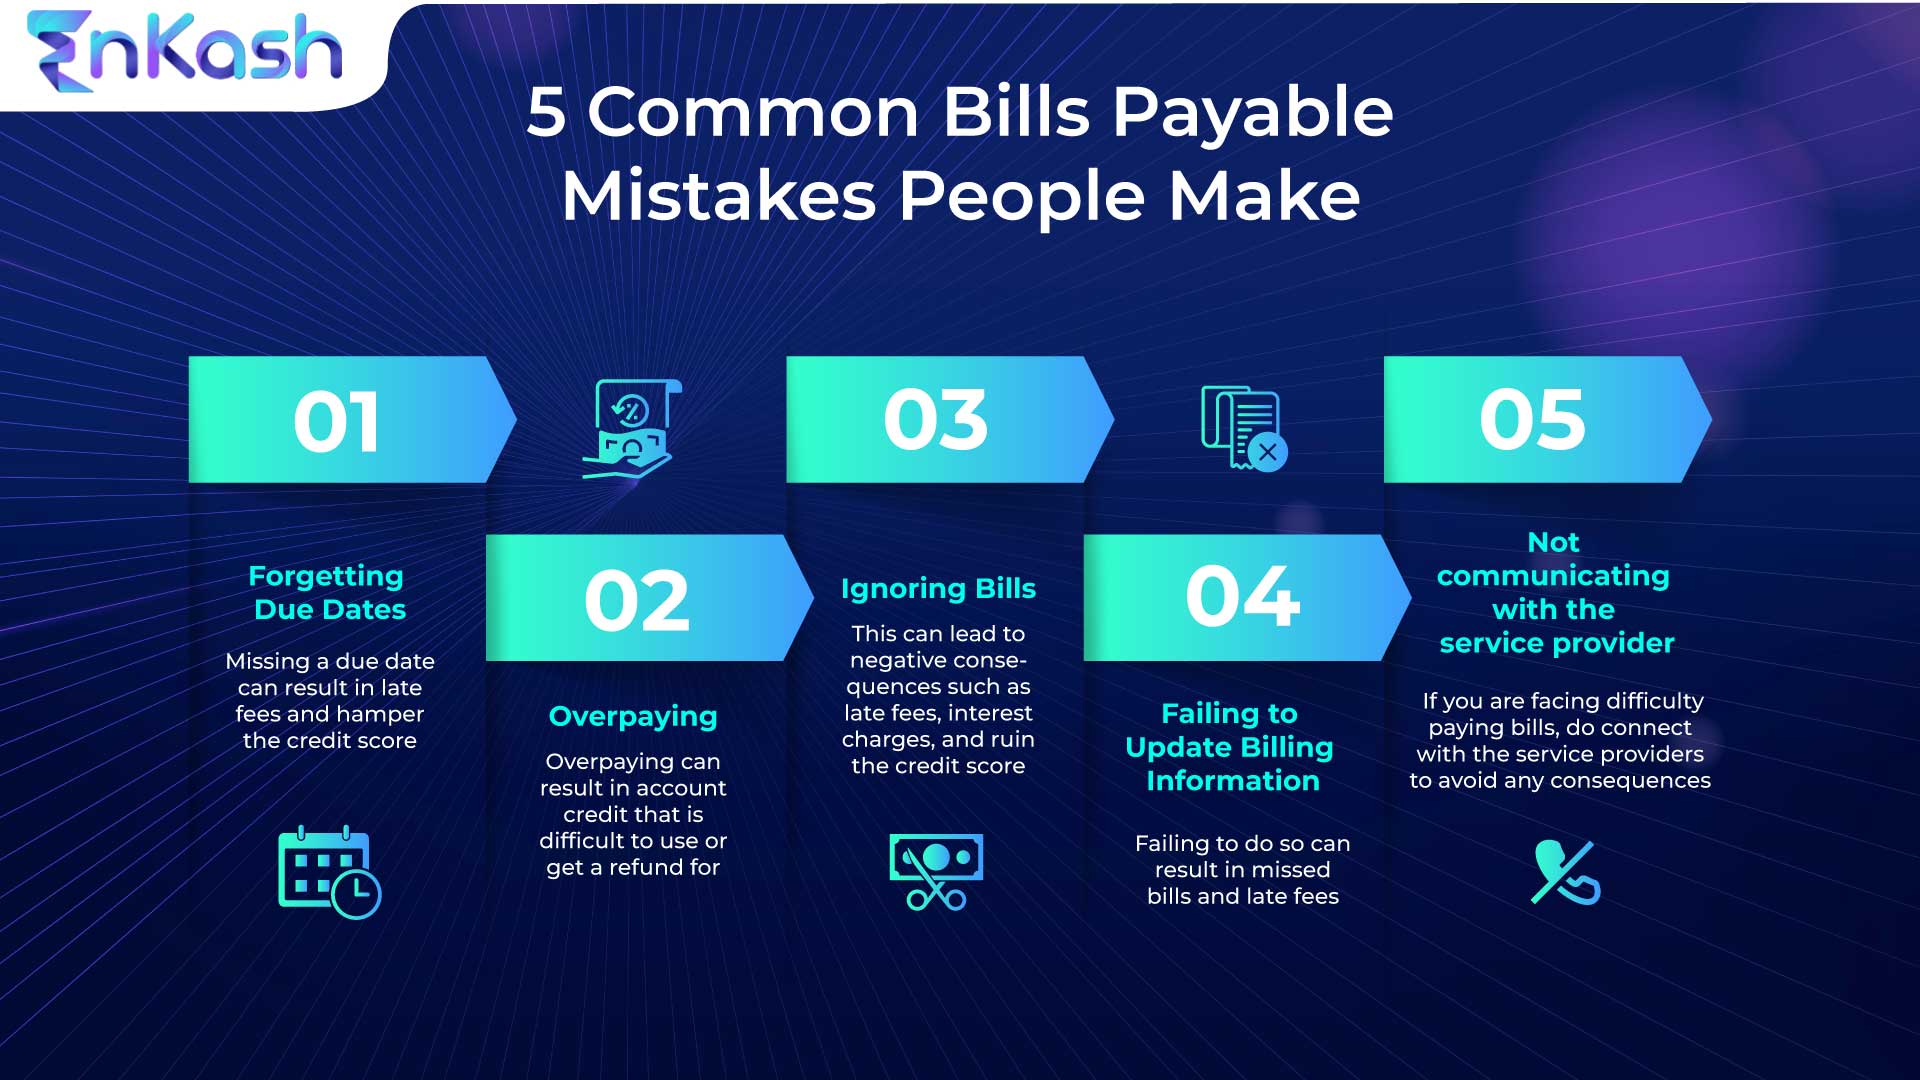 Common bills payable mistakes